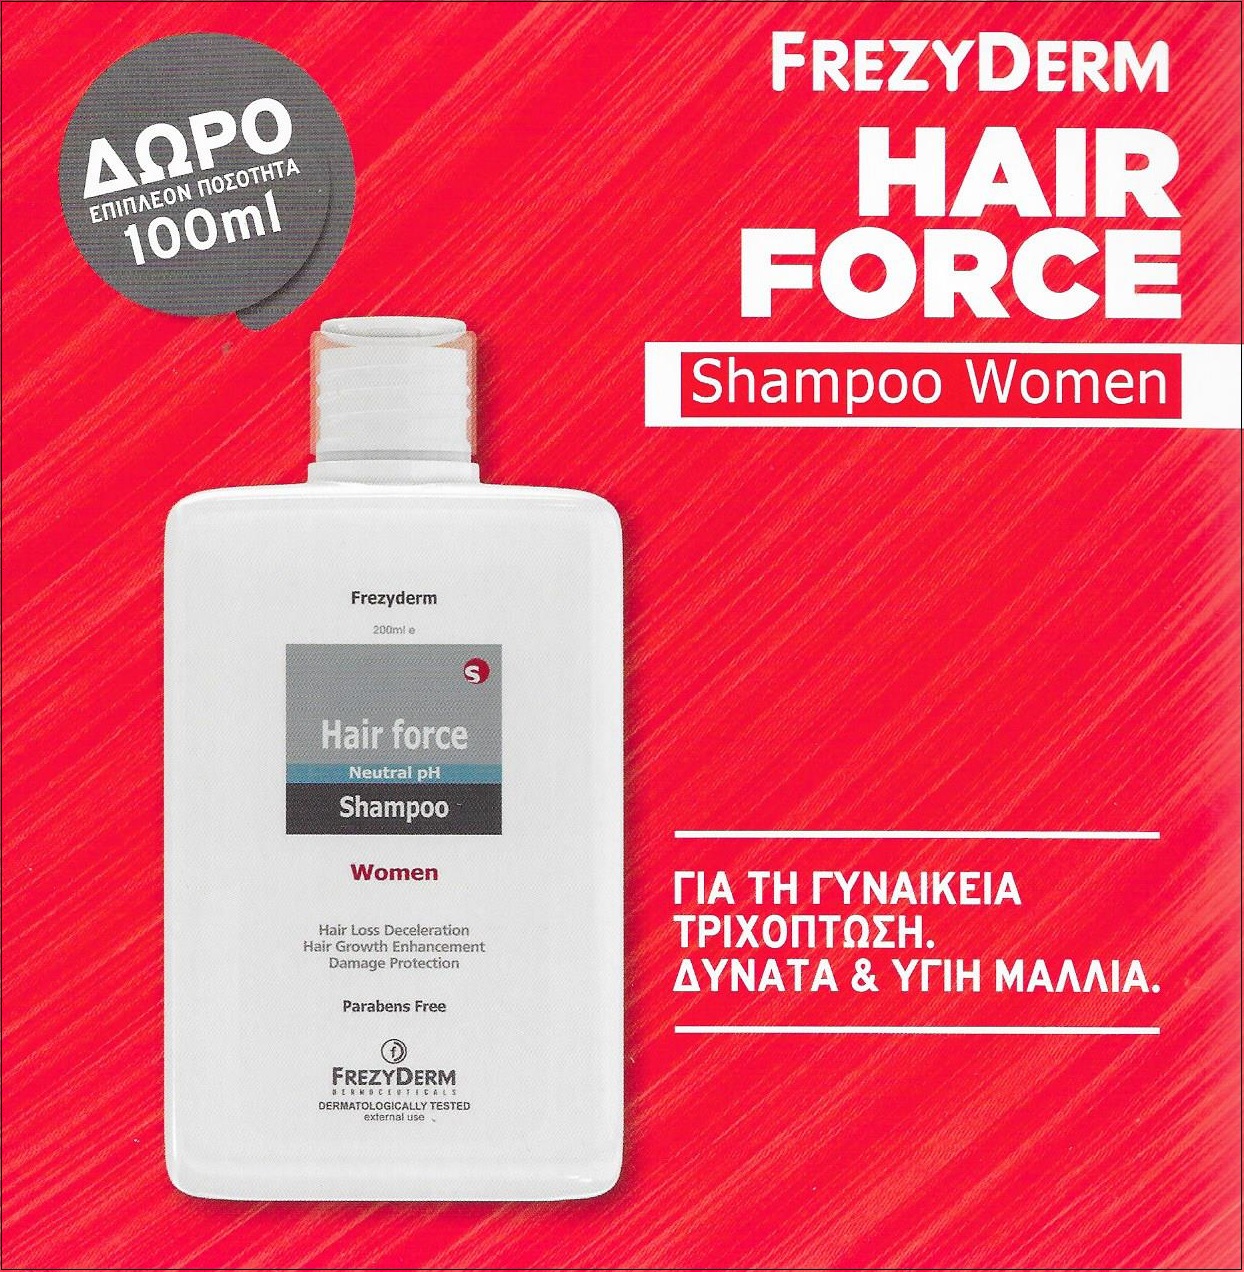 FREZYDERM Hair Force Shampoo Women 200ml + Gift Extra Quantity 100ml